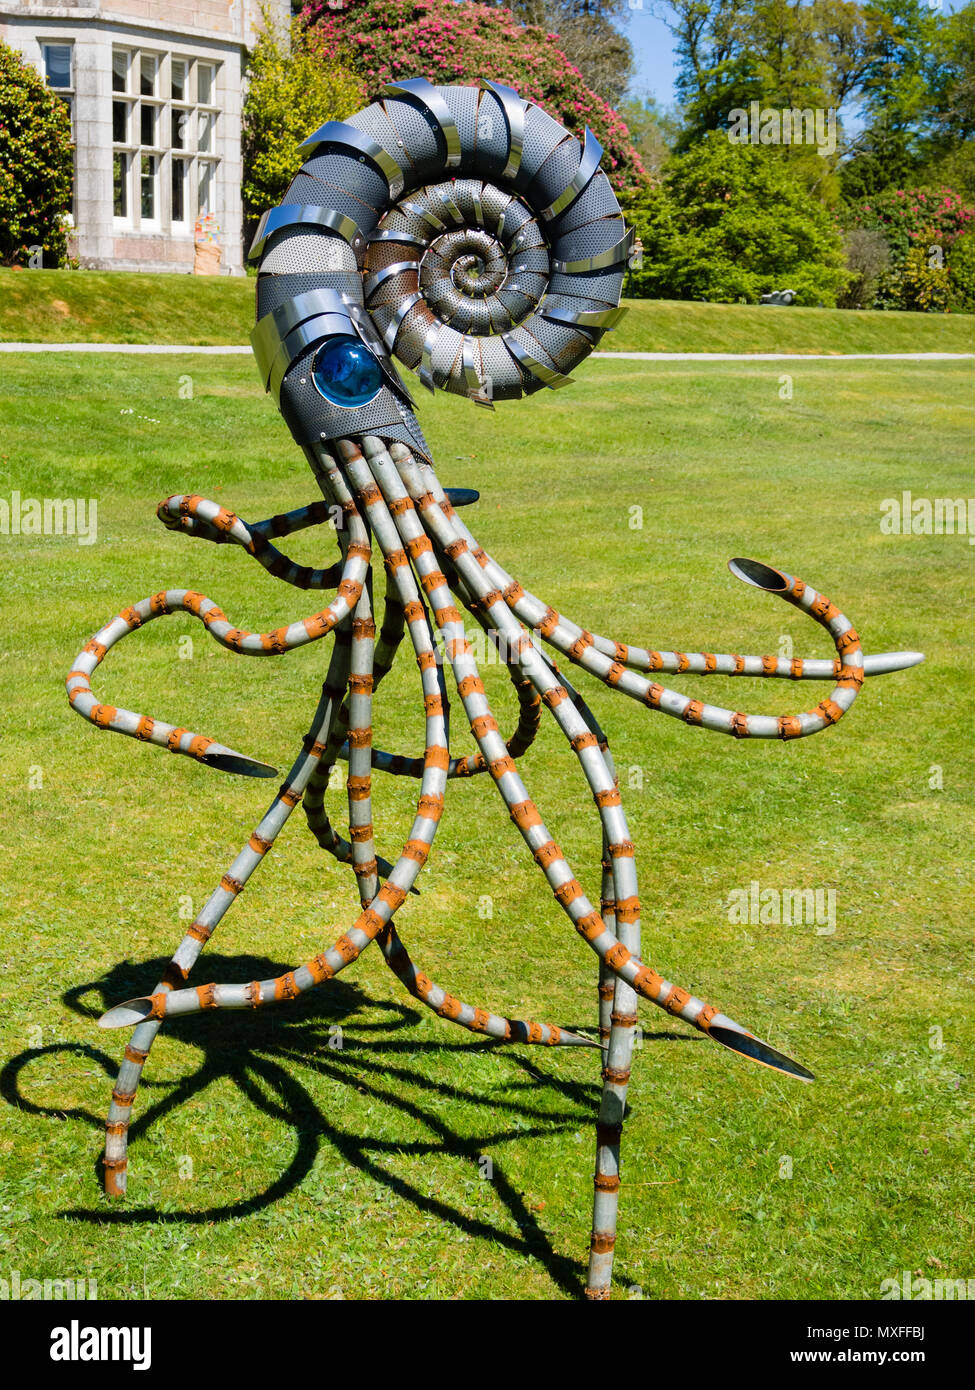 Walking Ammonite sculpture by Glenn Martin exhibited on the lawn at Delamore Arts exhibition, Devon, UK, 2018 Stock Photo